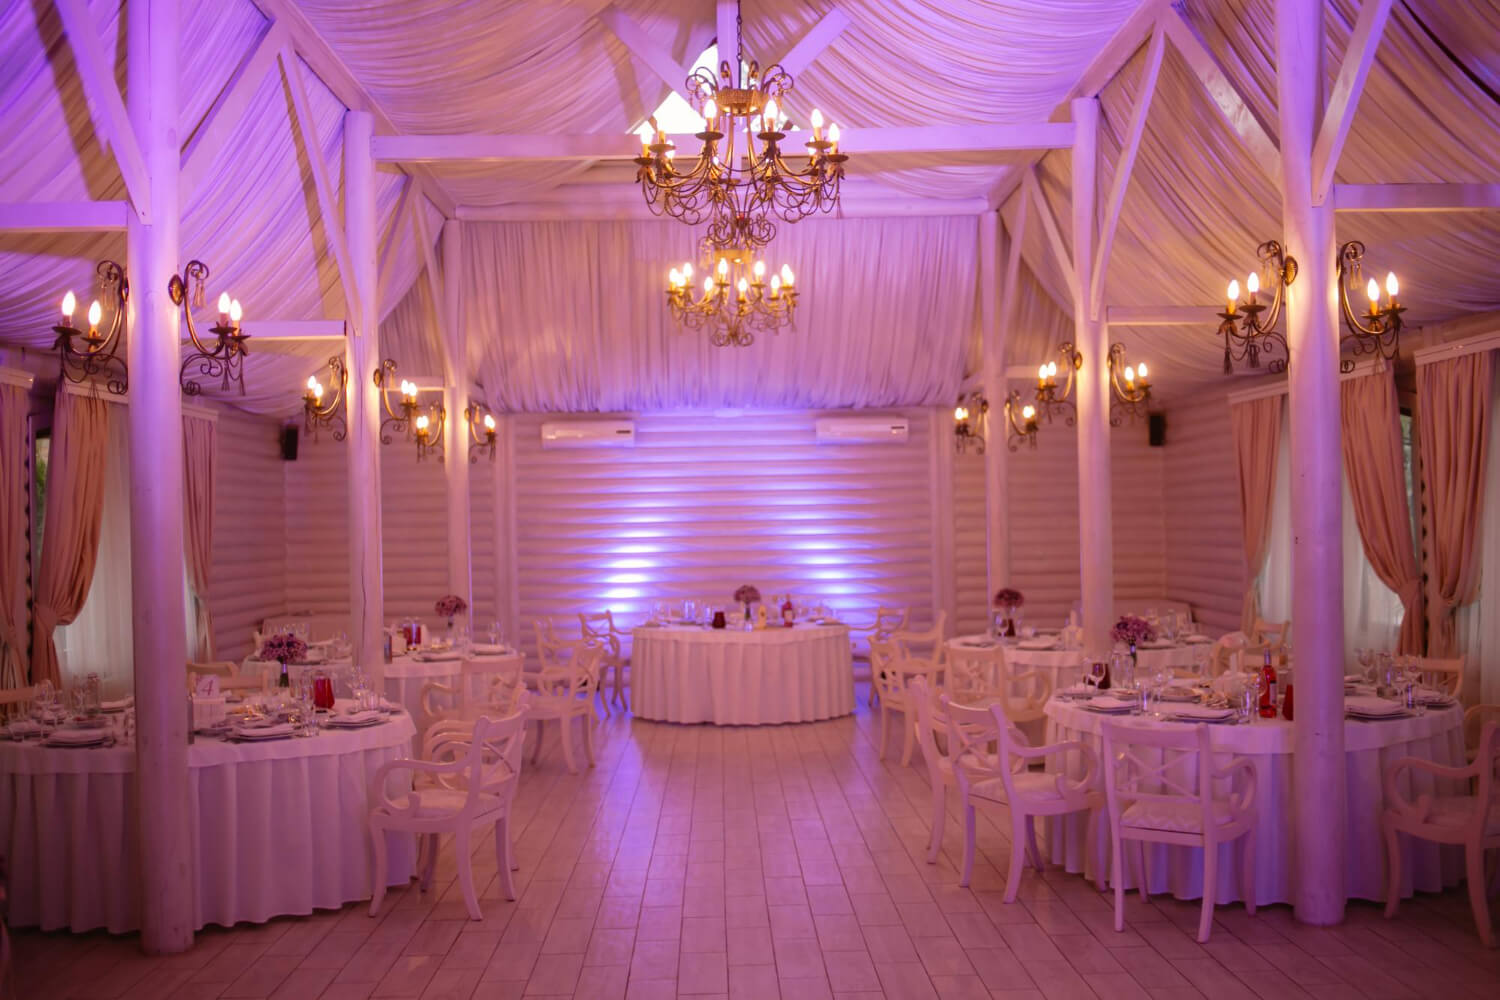 restaurant-hall-wedding-ceremony-restaurant-hall-is-decorated-wedding-ceremony-1-1